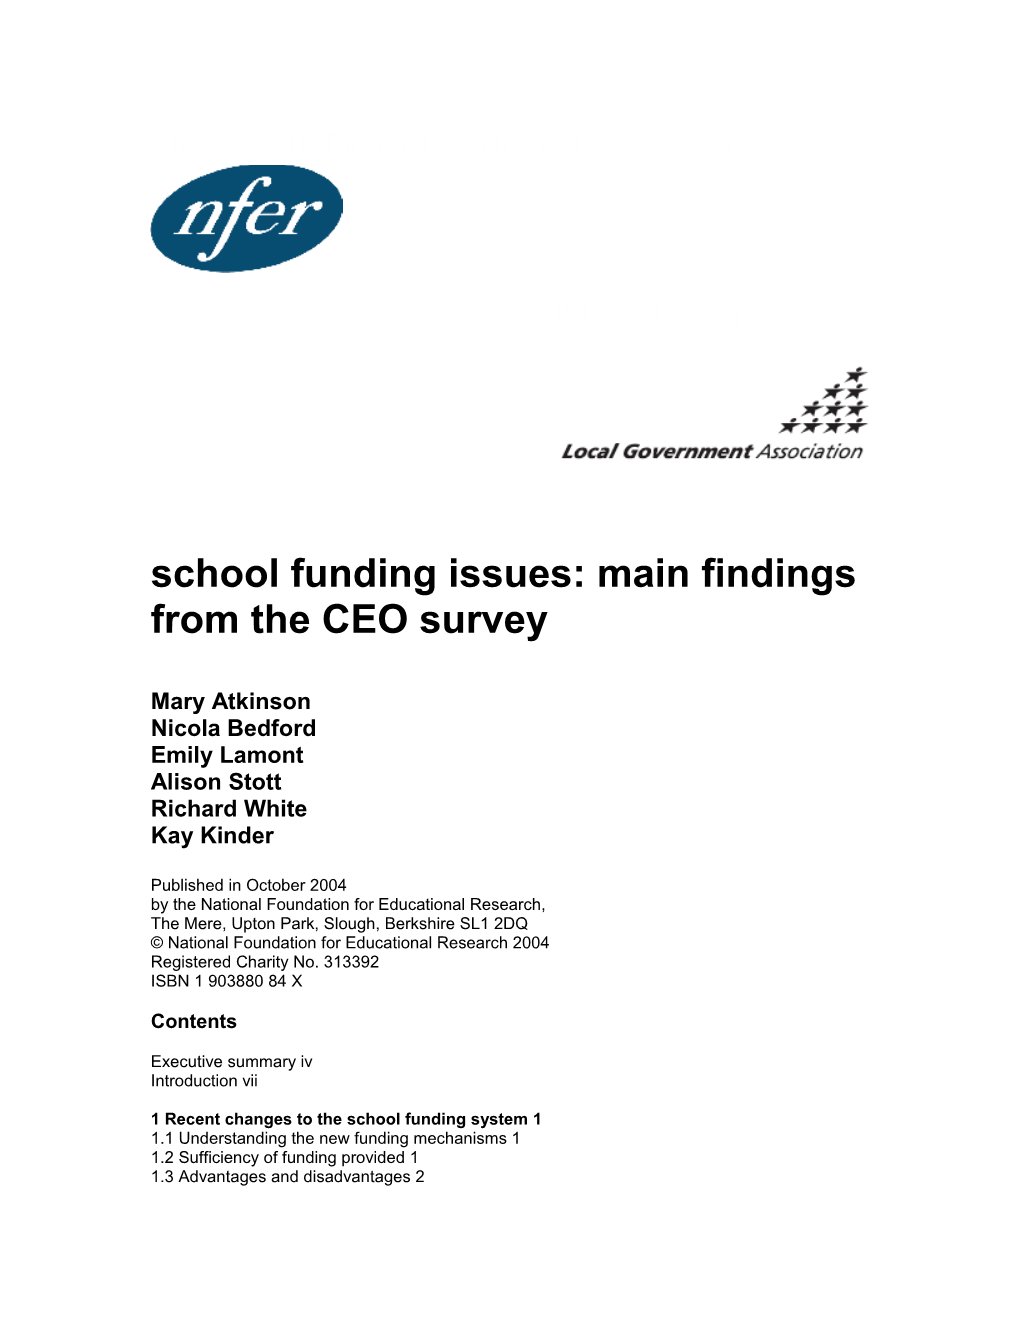 School Funding Issues